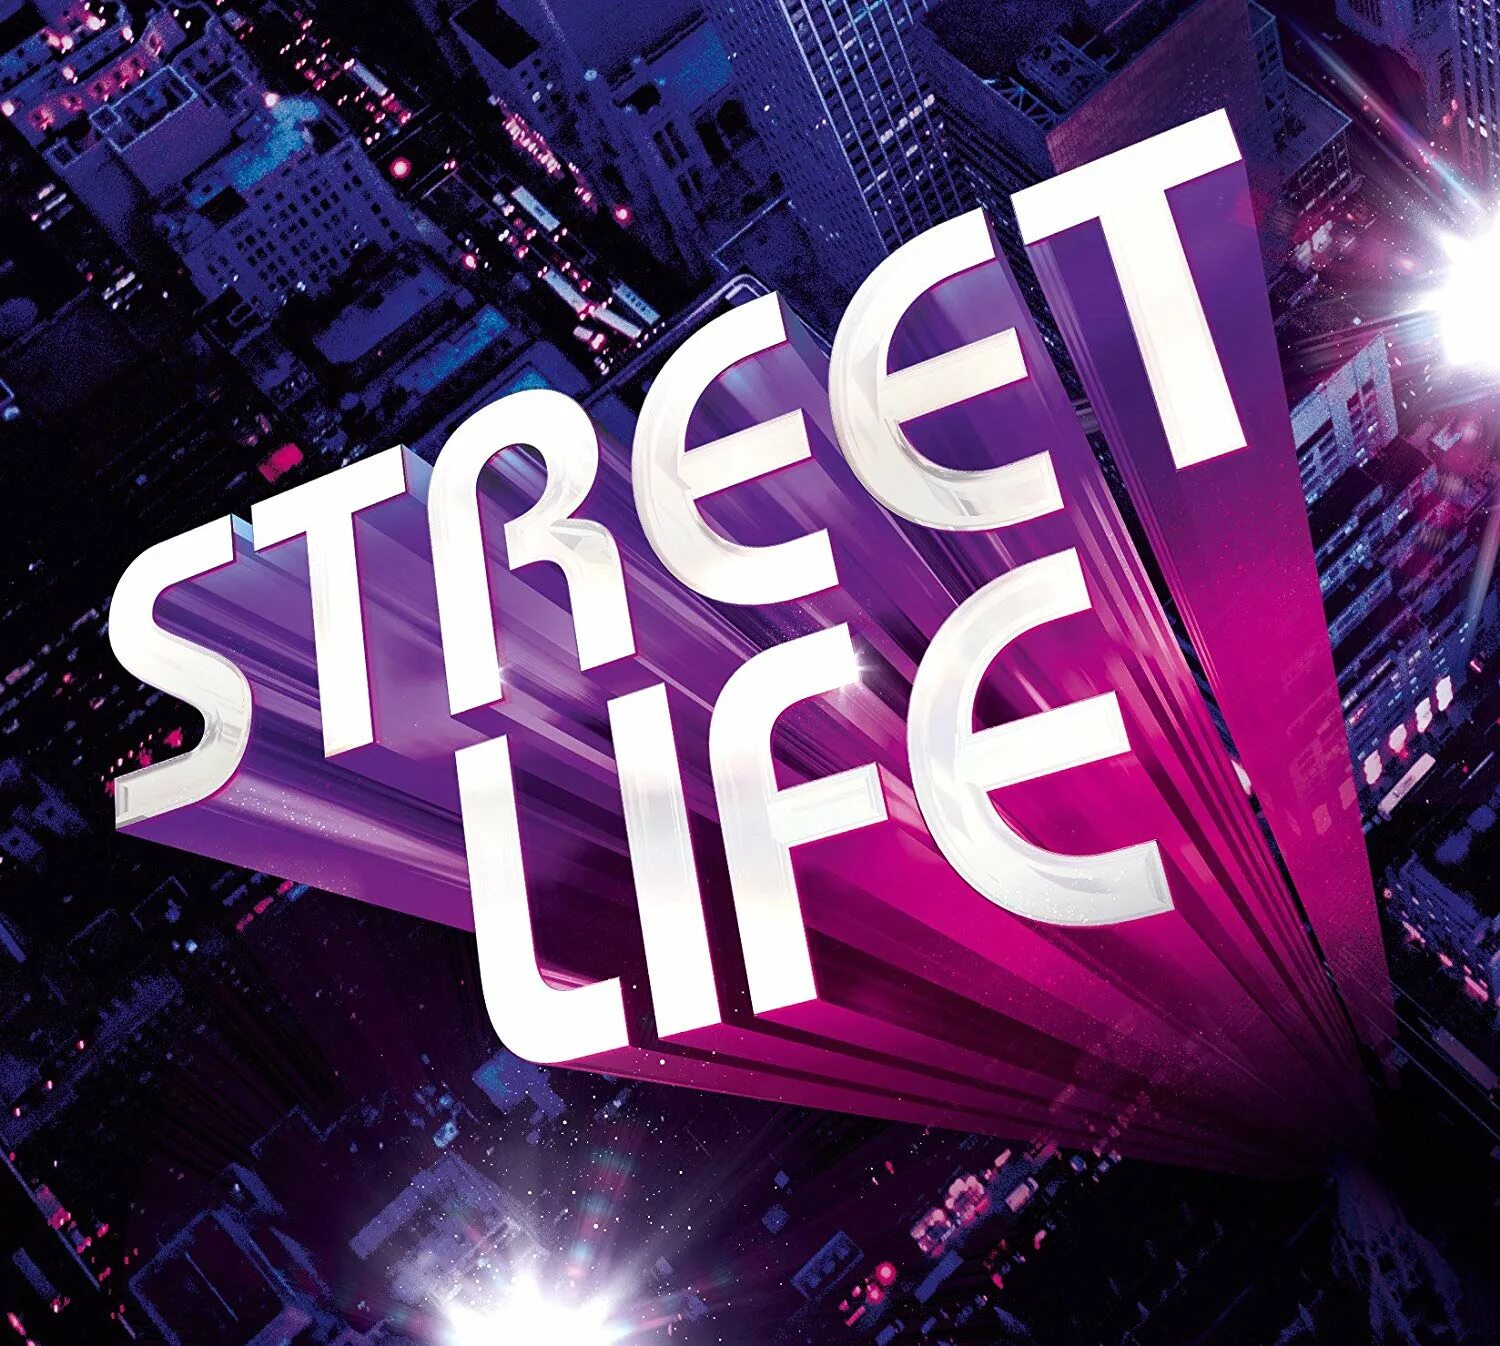 Street Life. Картинки Street Life. Street Life логотип. Превьюшки Life Street. 3 street life